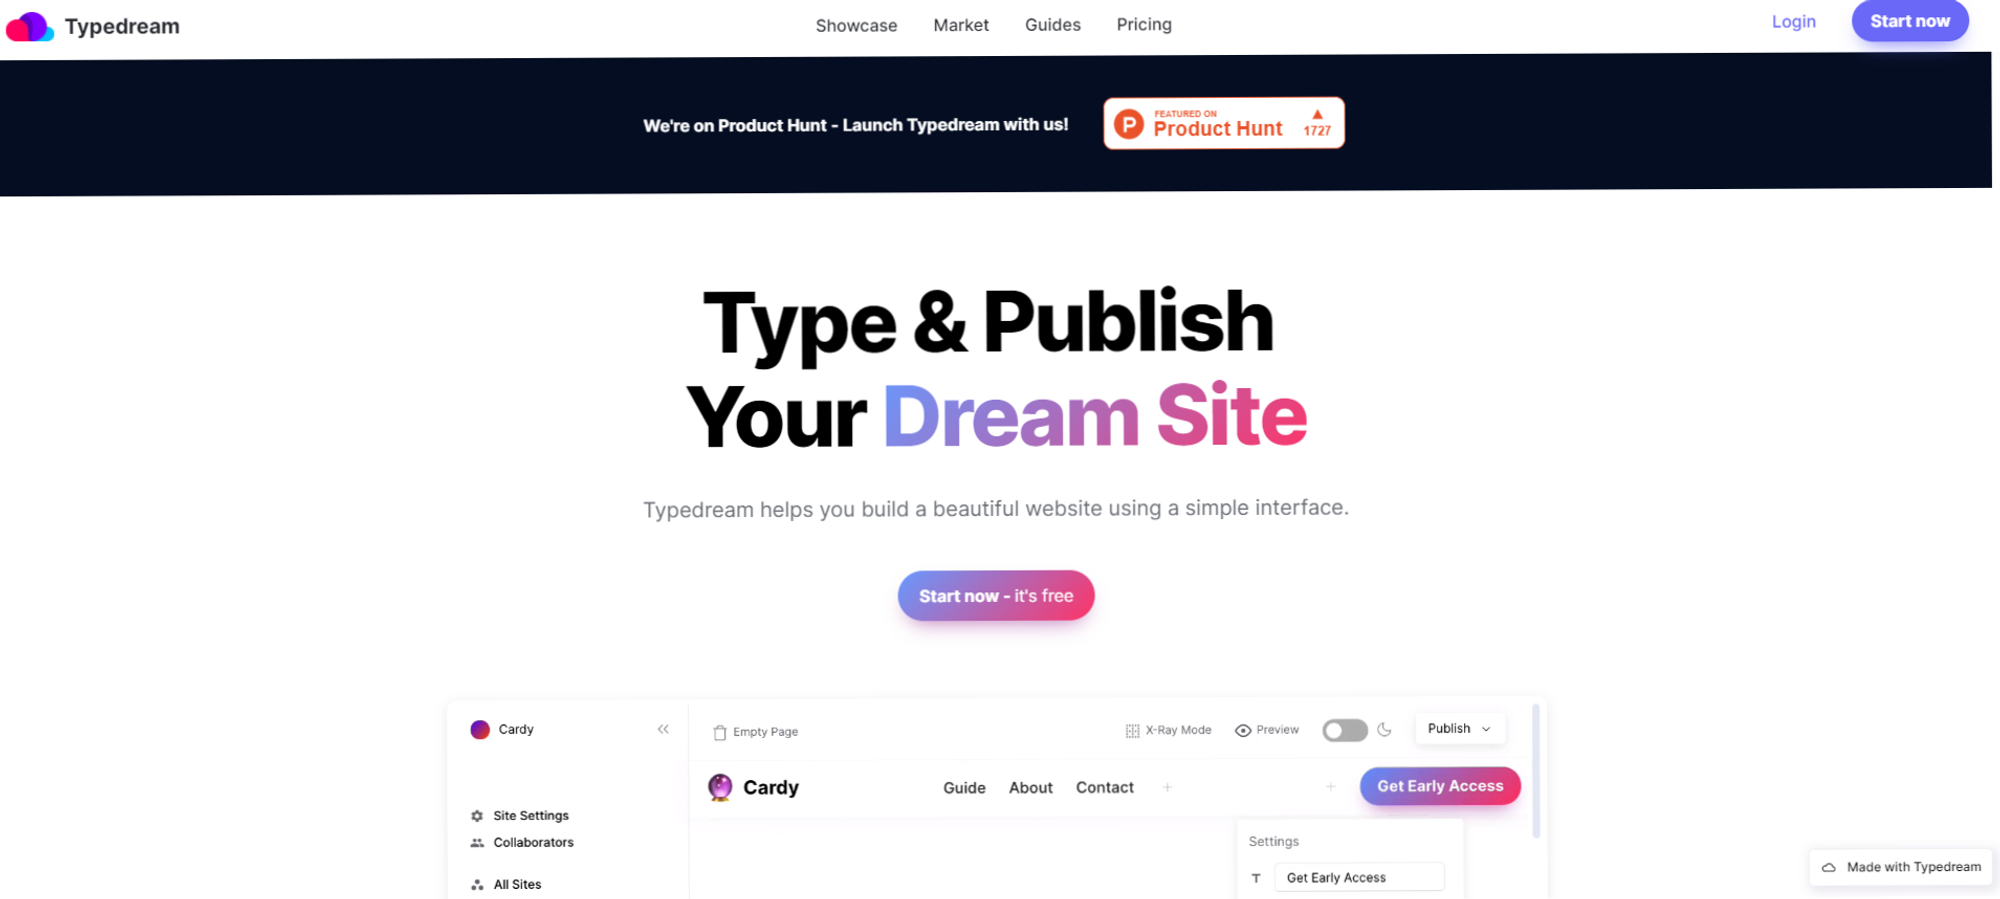 Typedream - Type & Publish Your Dream Site 🌈